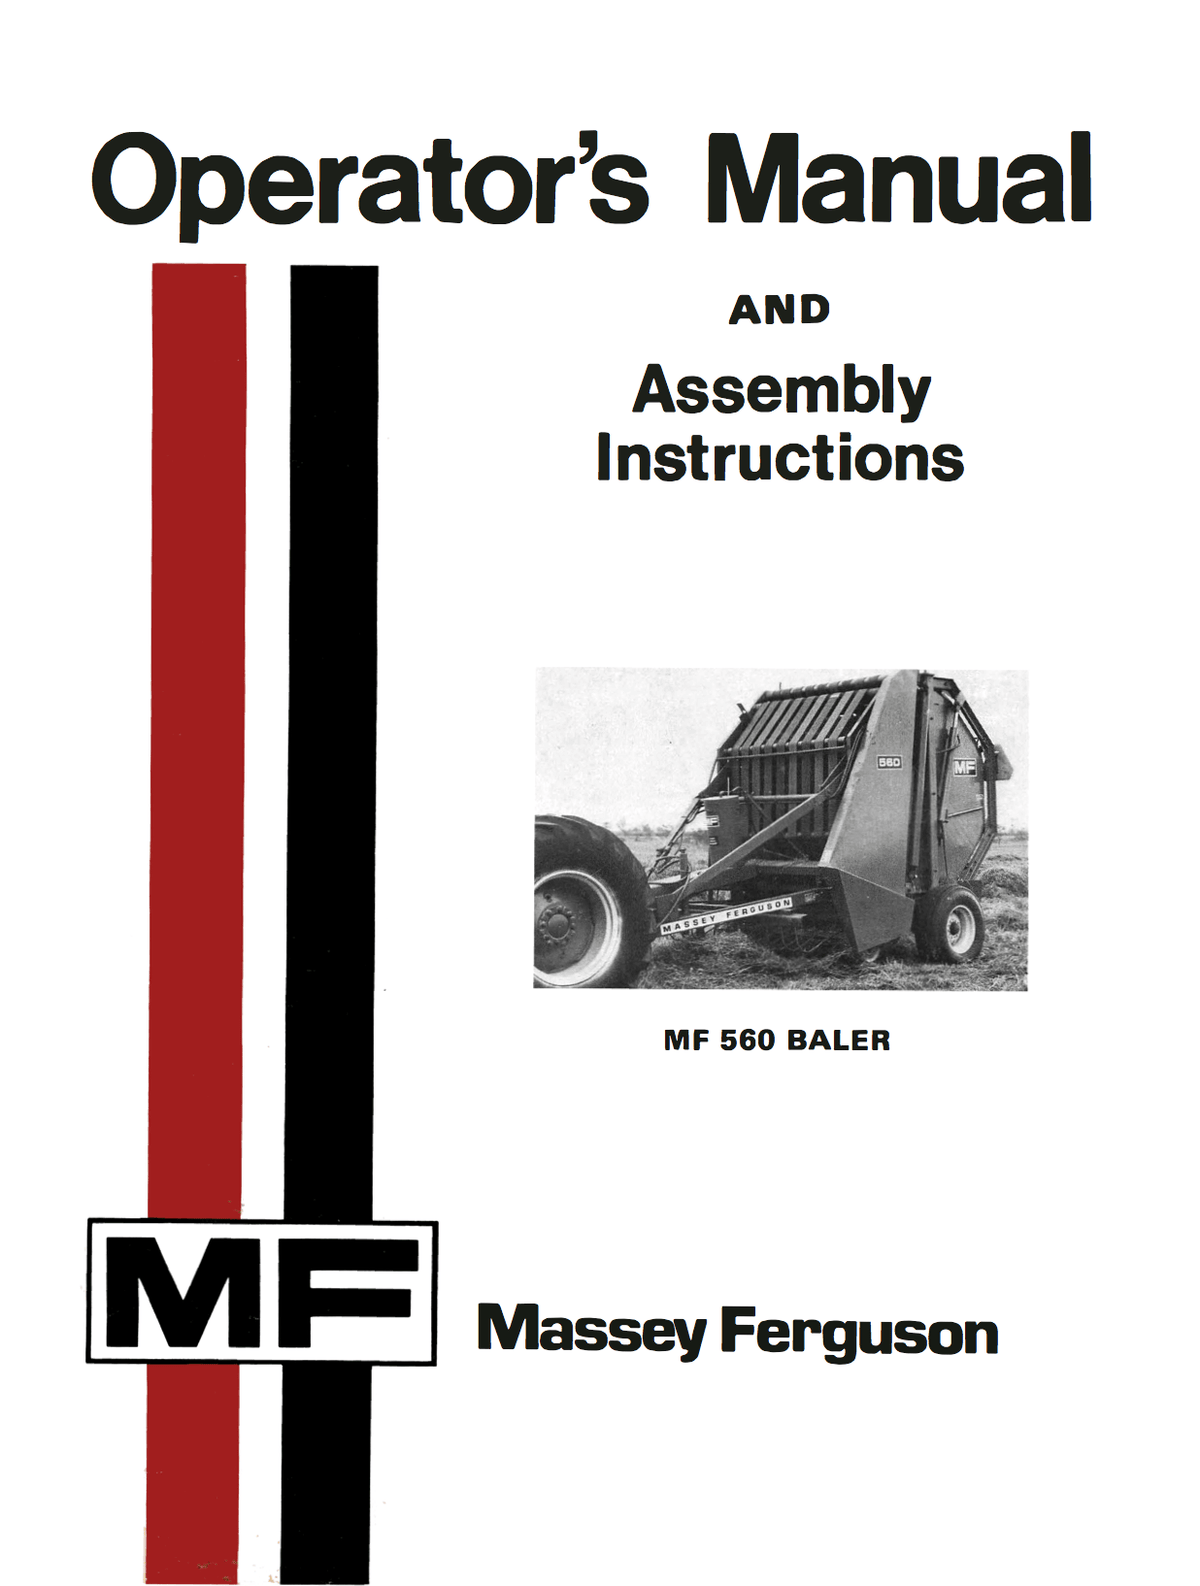 Massey Ferguson MF 560 Baler - Operator's Manual and Assembly Instructions - Ag Manuals - A Provider of Digital Farm Manuals - 1